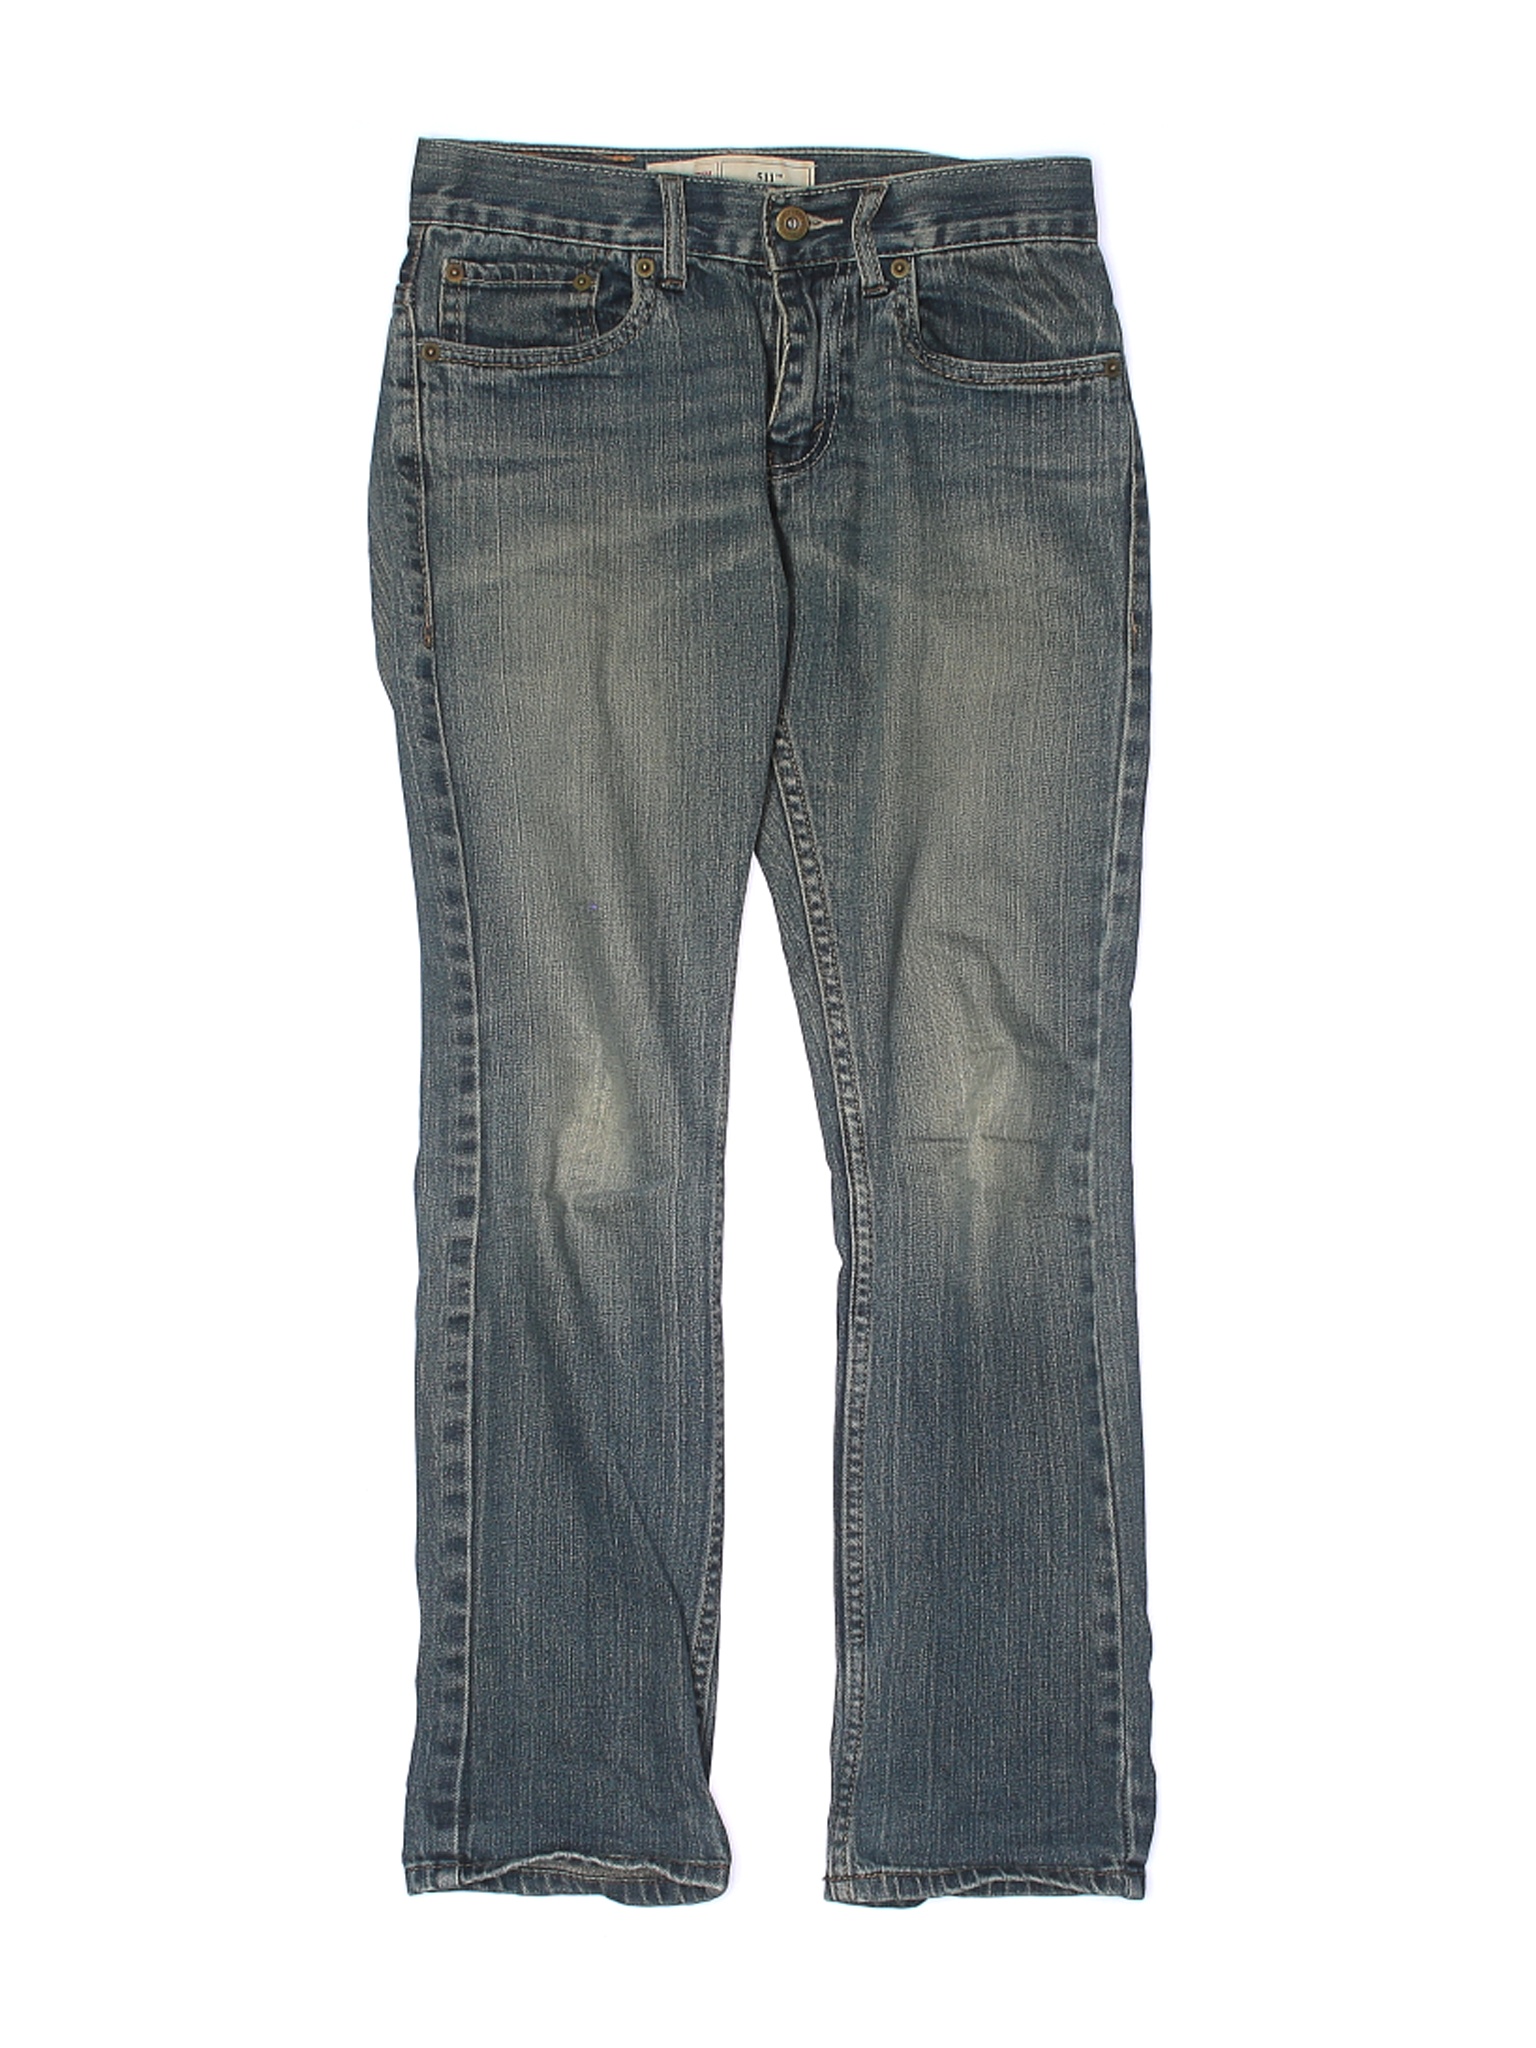 Levi's Boys Gray Jeans 12 | eBay